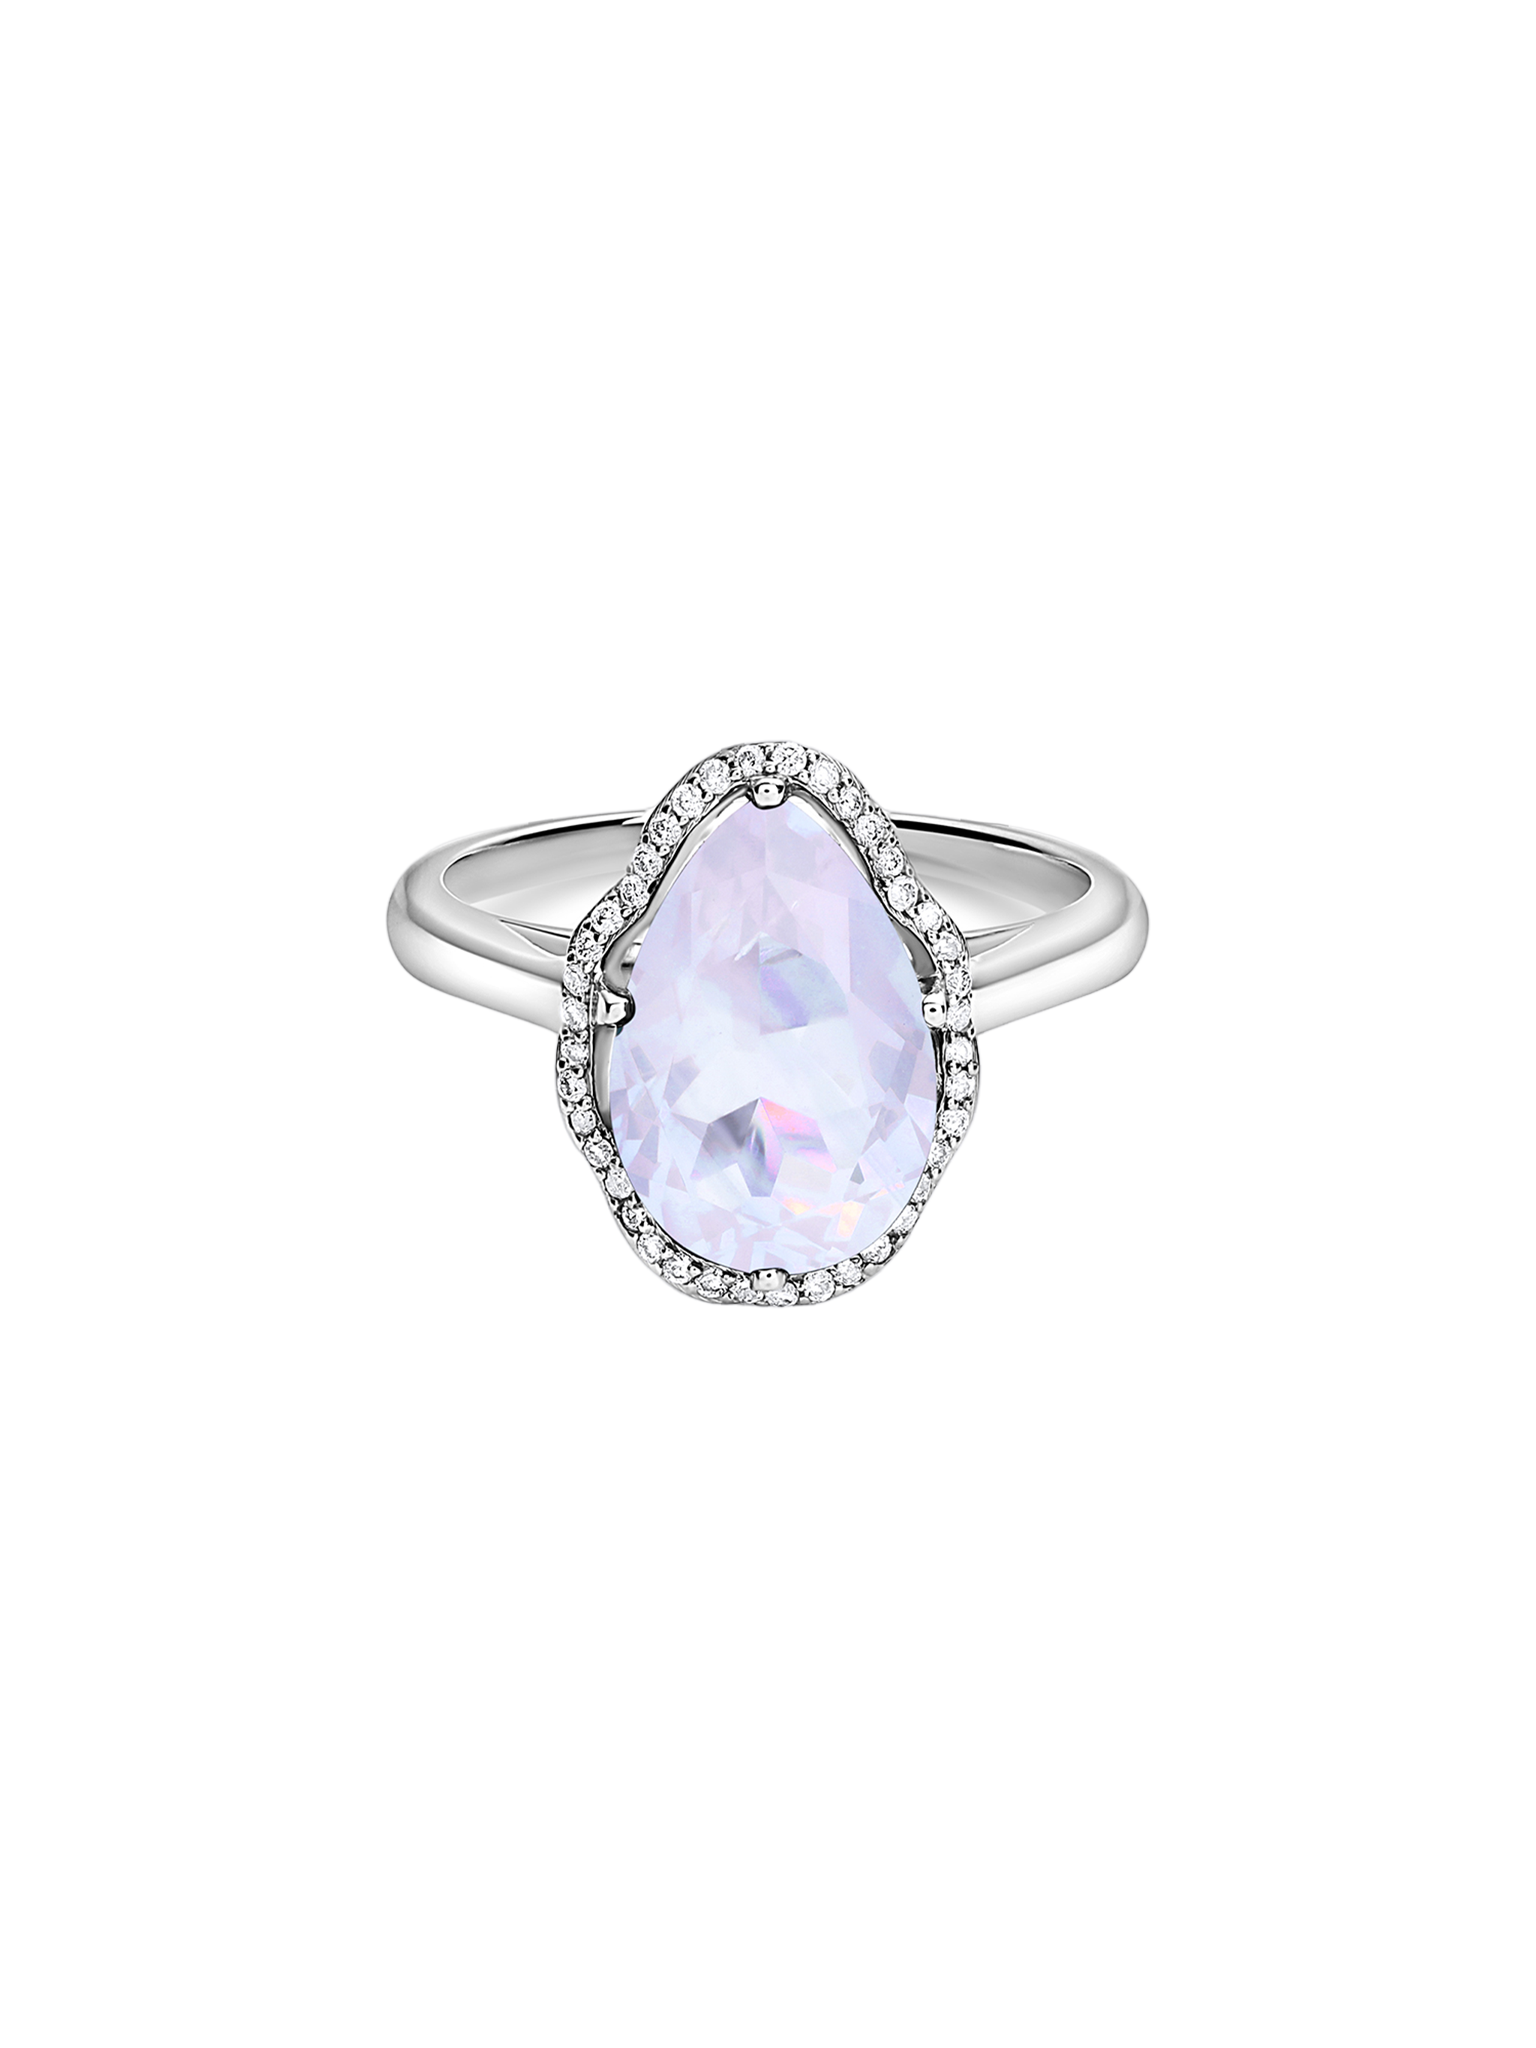 Glow ring lavender quartz with diamonds